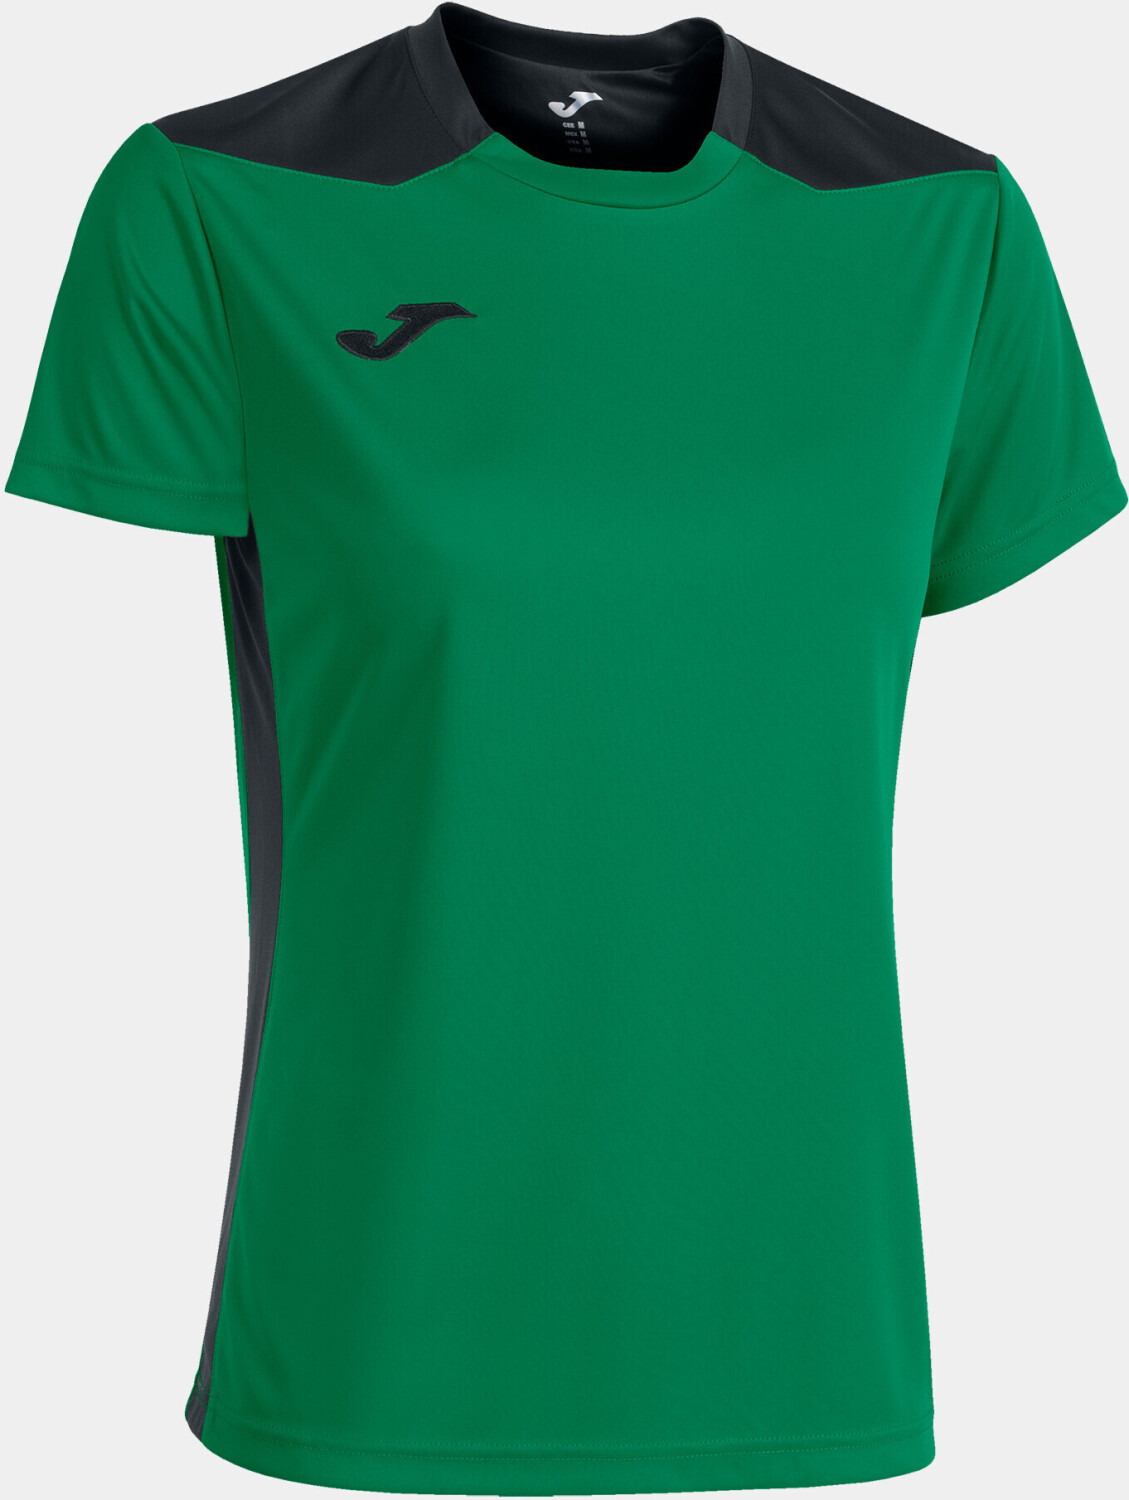 Photos - Football Kit Joma Championship VI Shirt Youth  green/black (101822k)